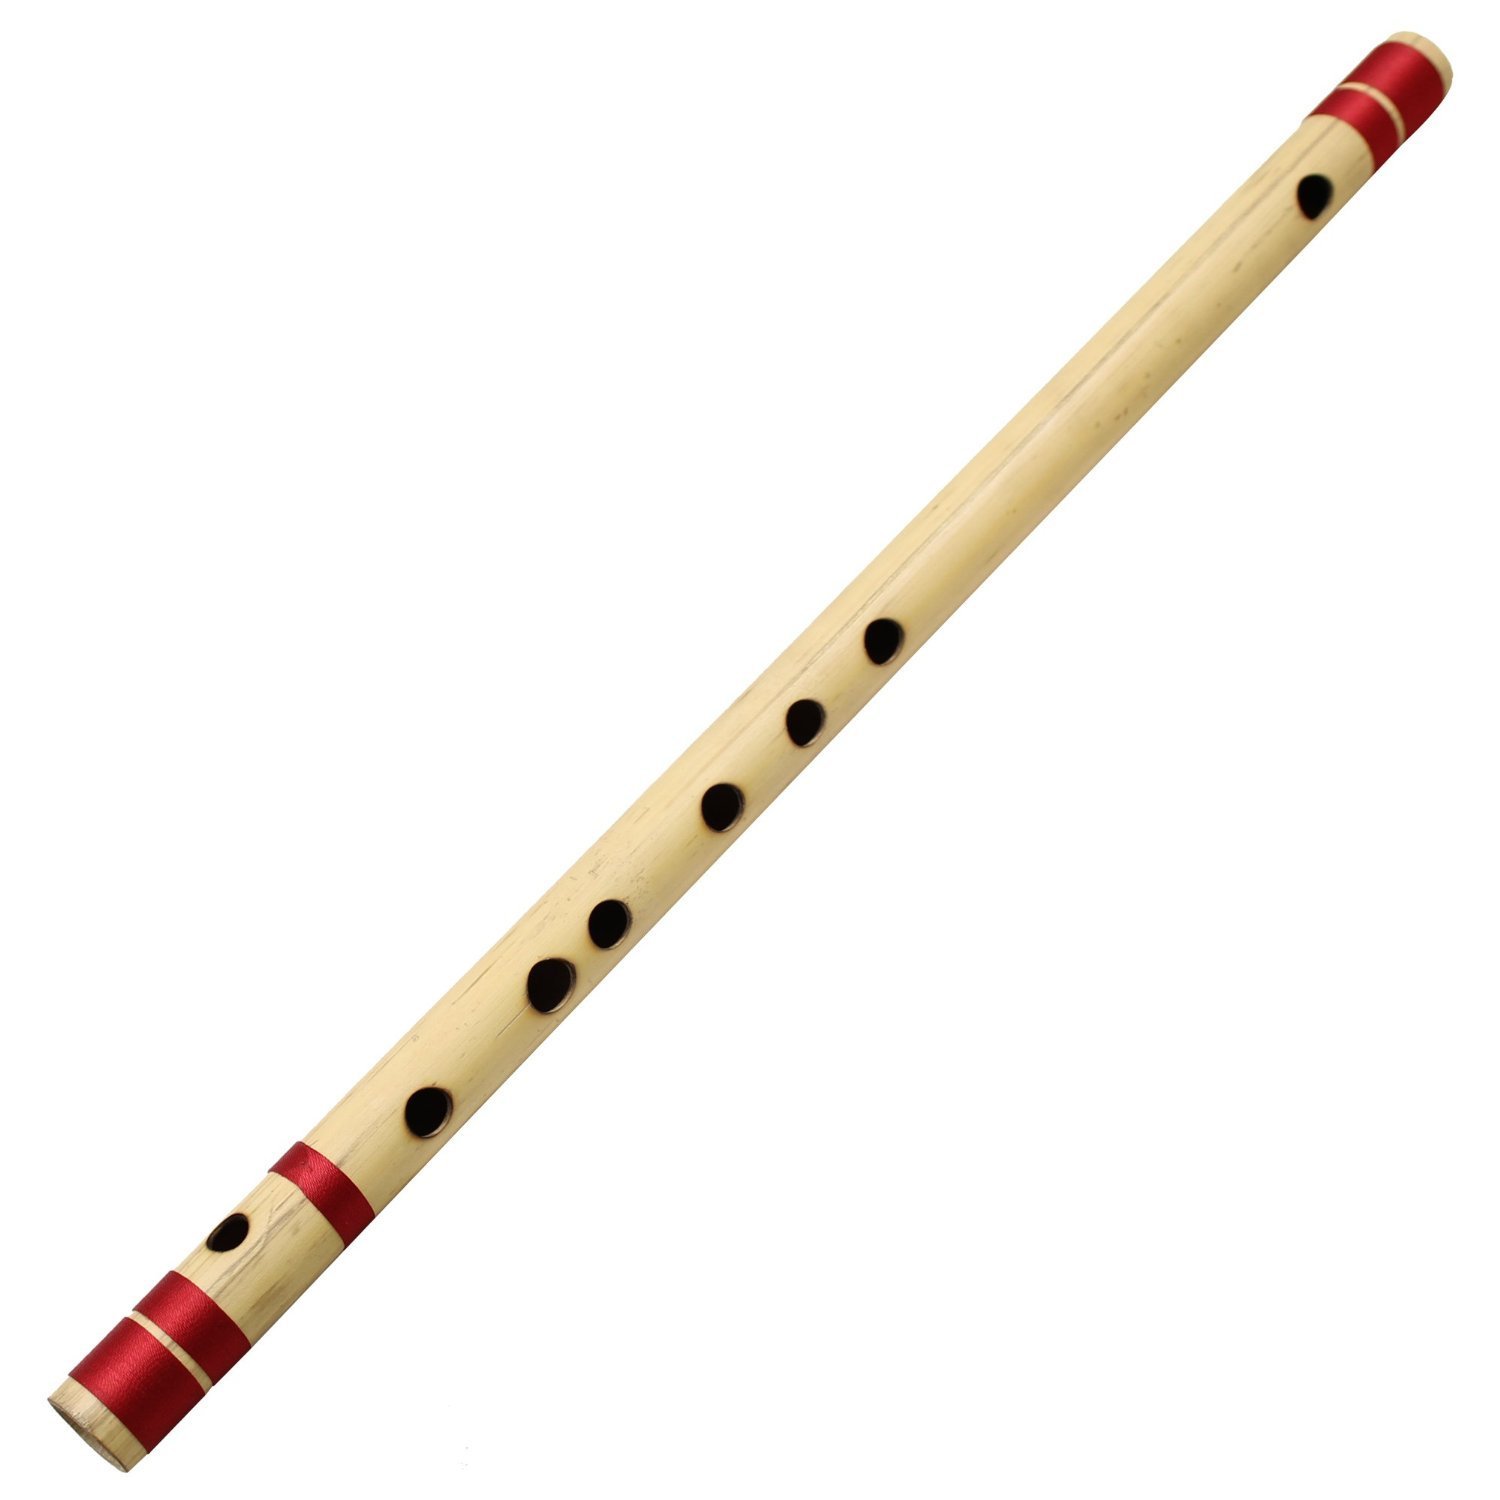 Bansuri The Instrument